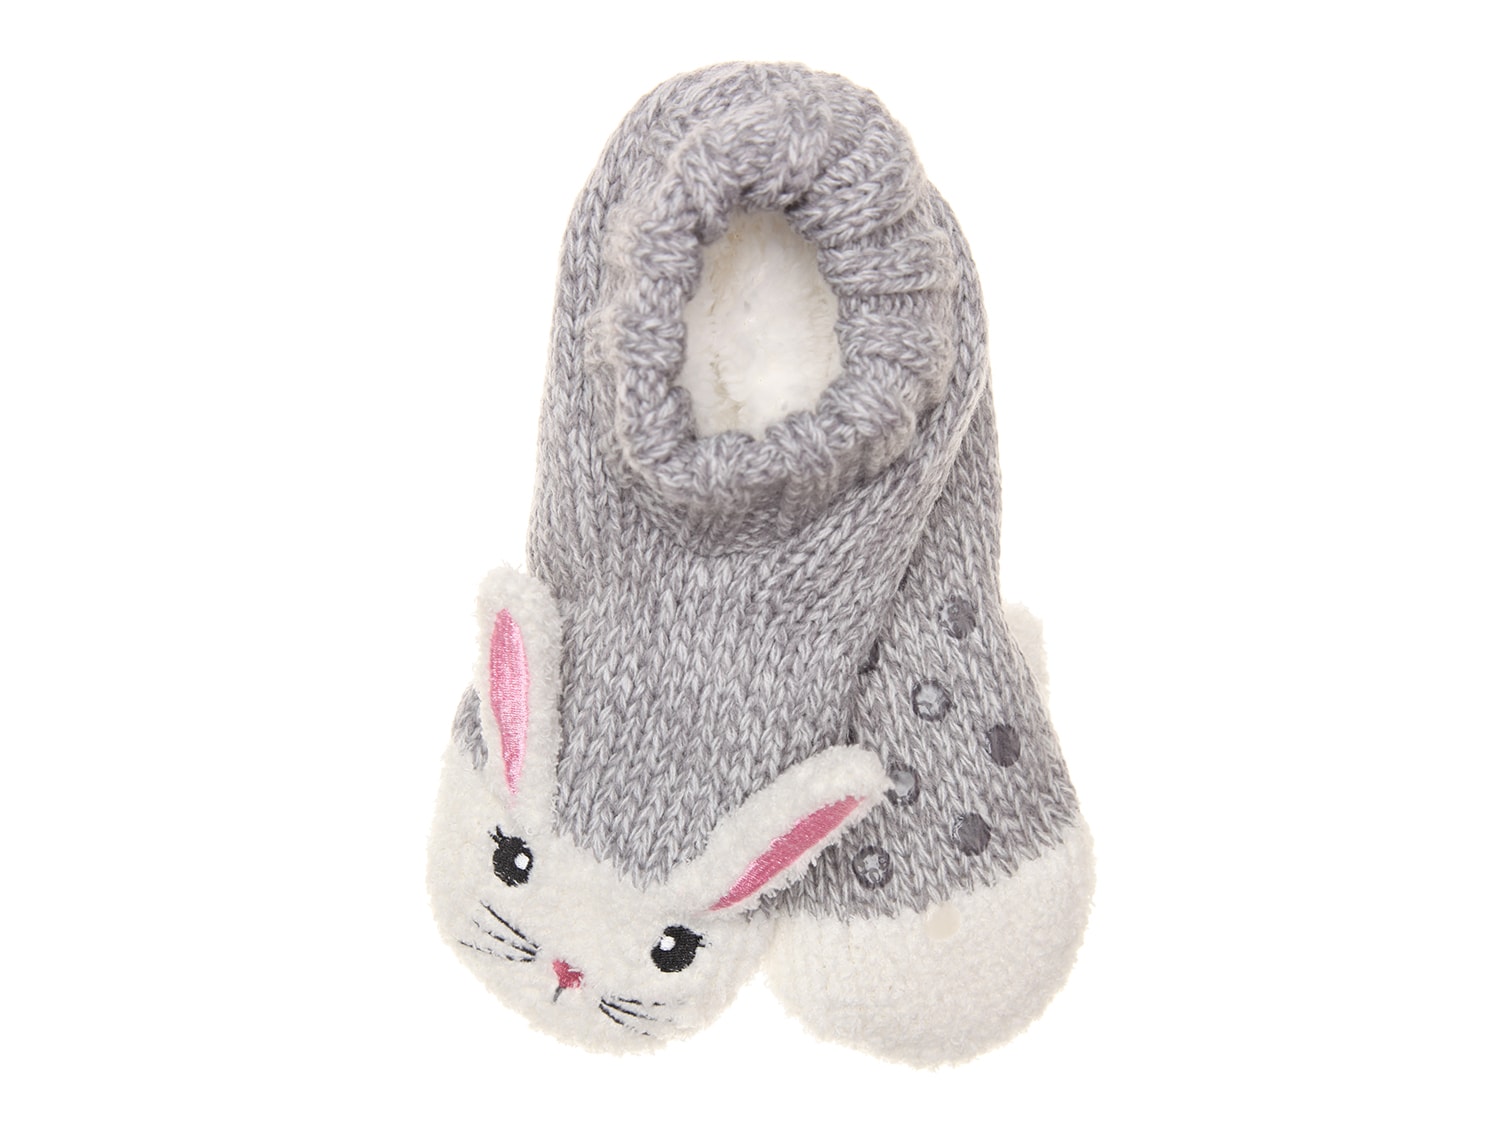 dsw bunny slippers